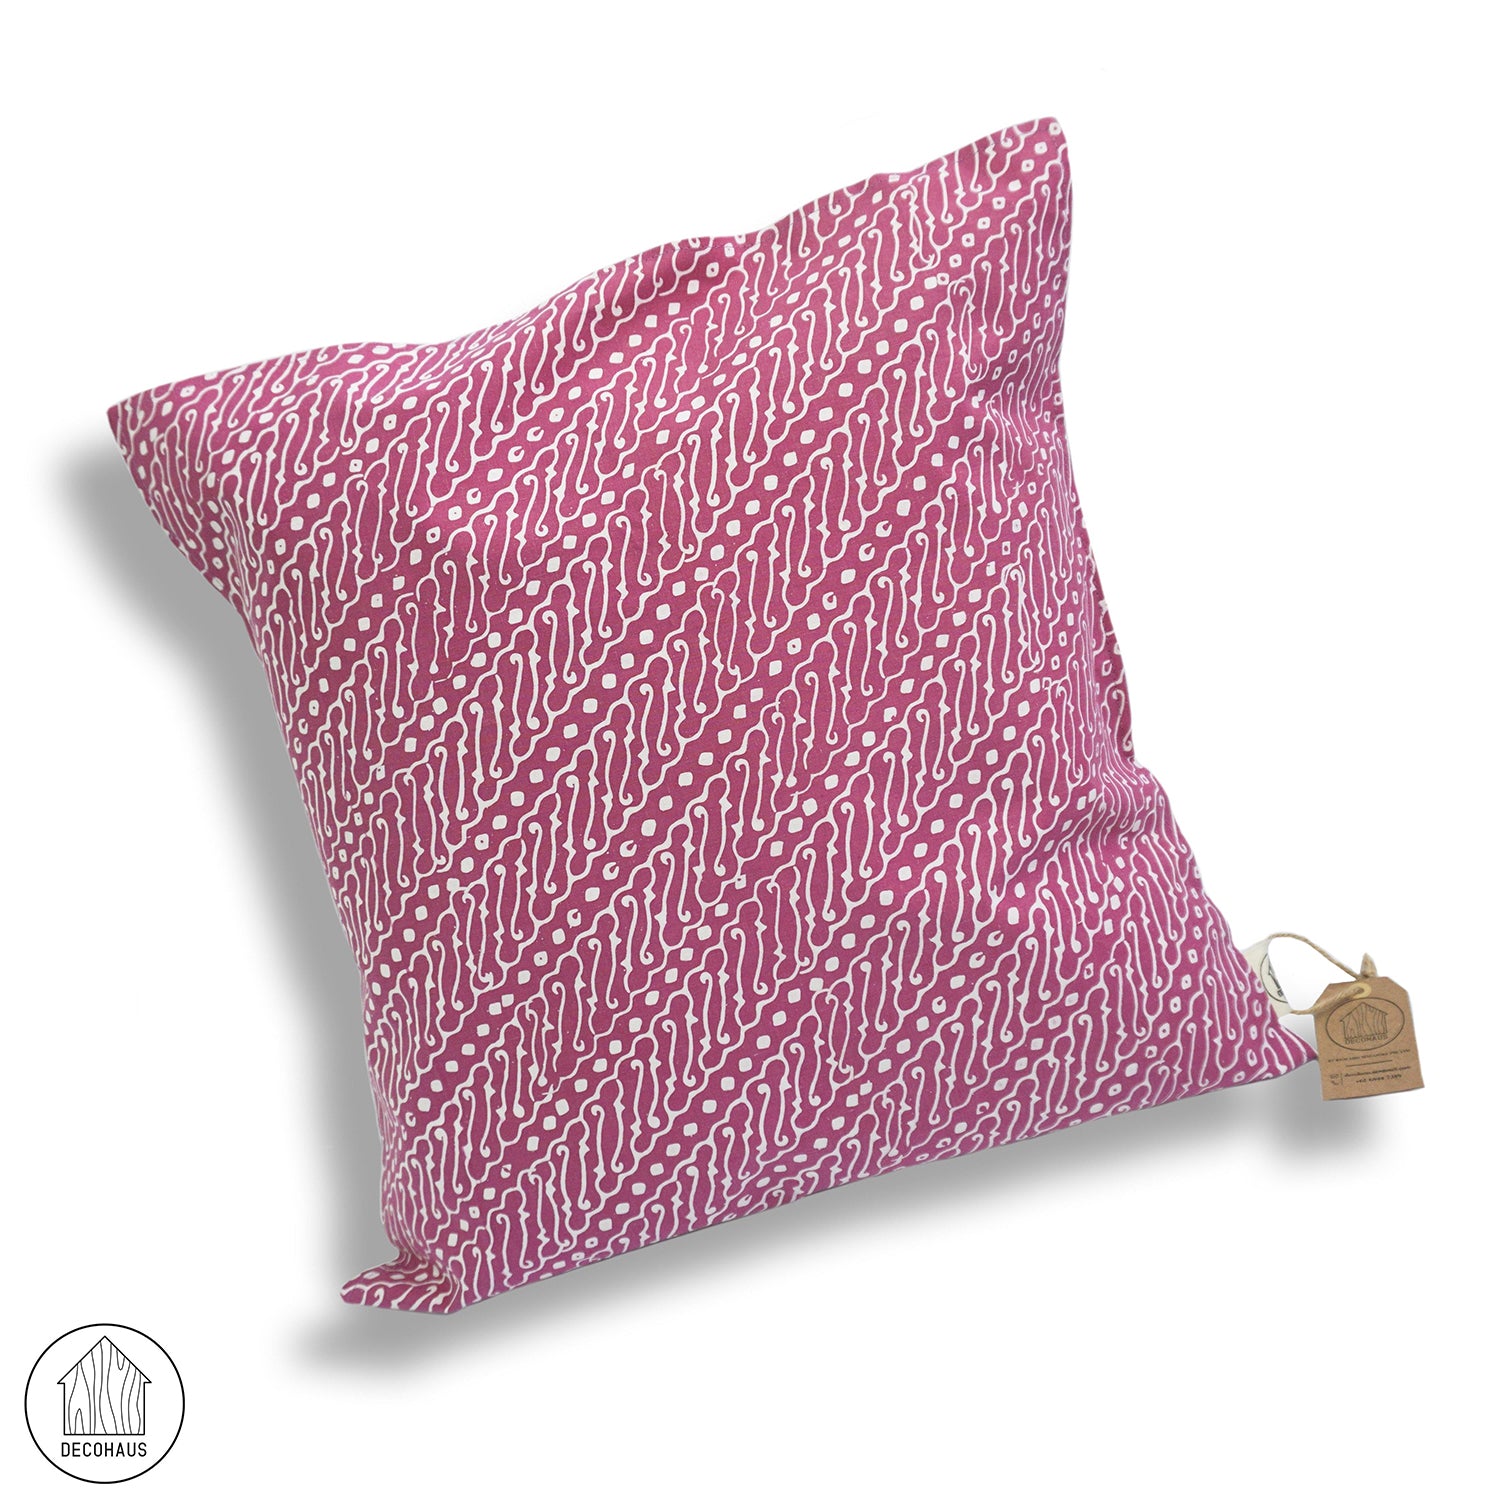 PARANG Handstamped Batik Cushion Cover in Pink